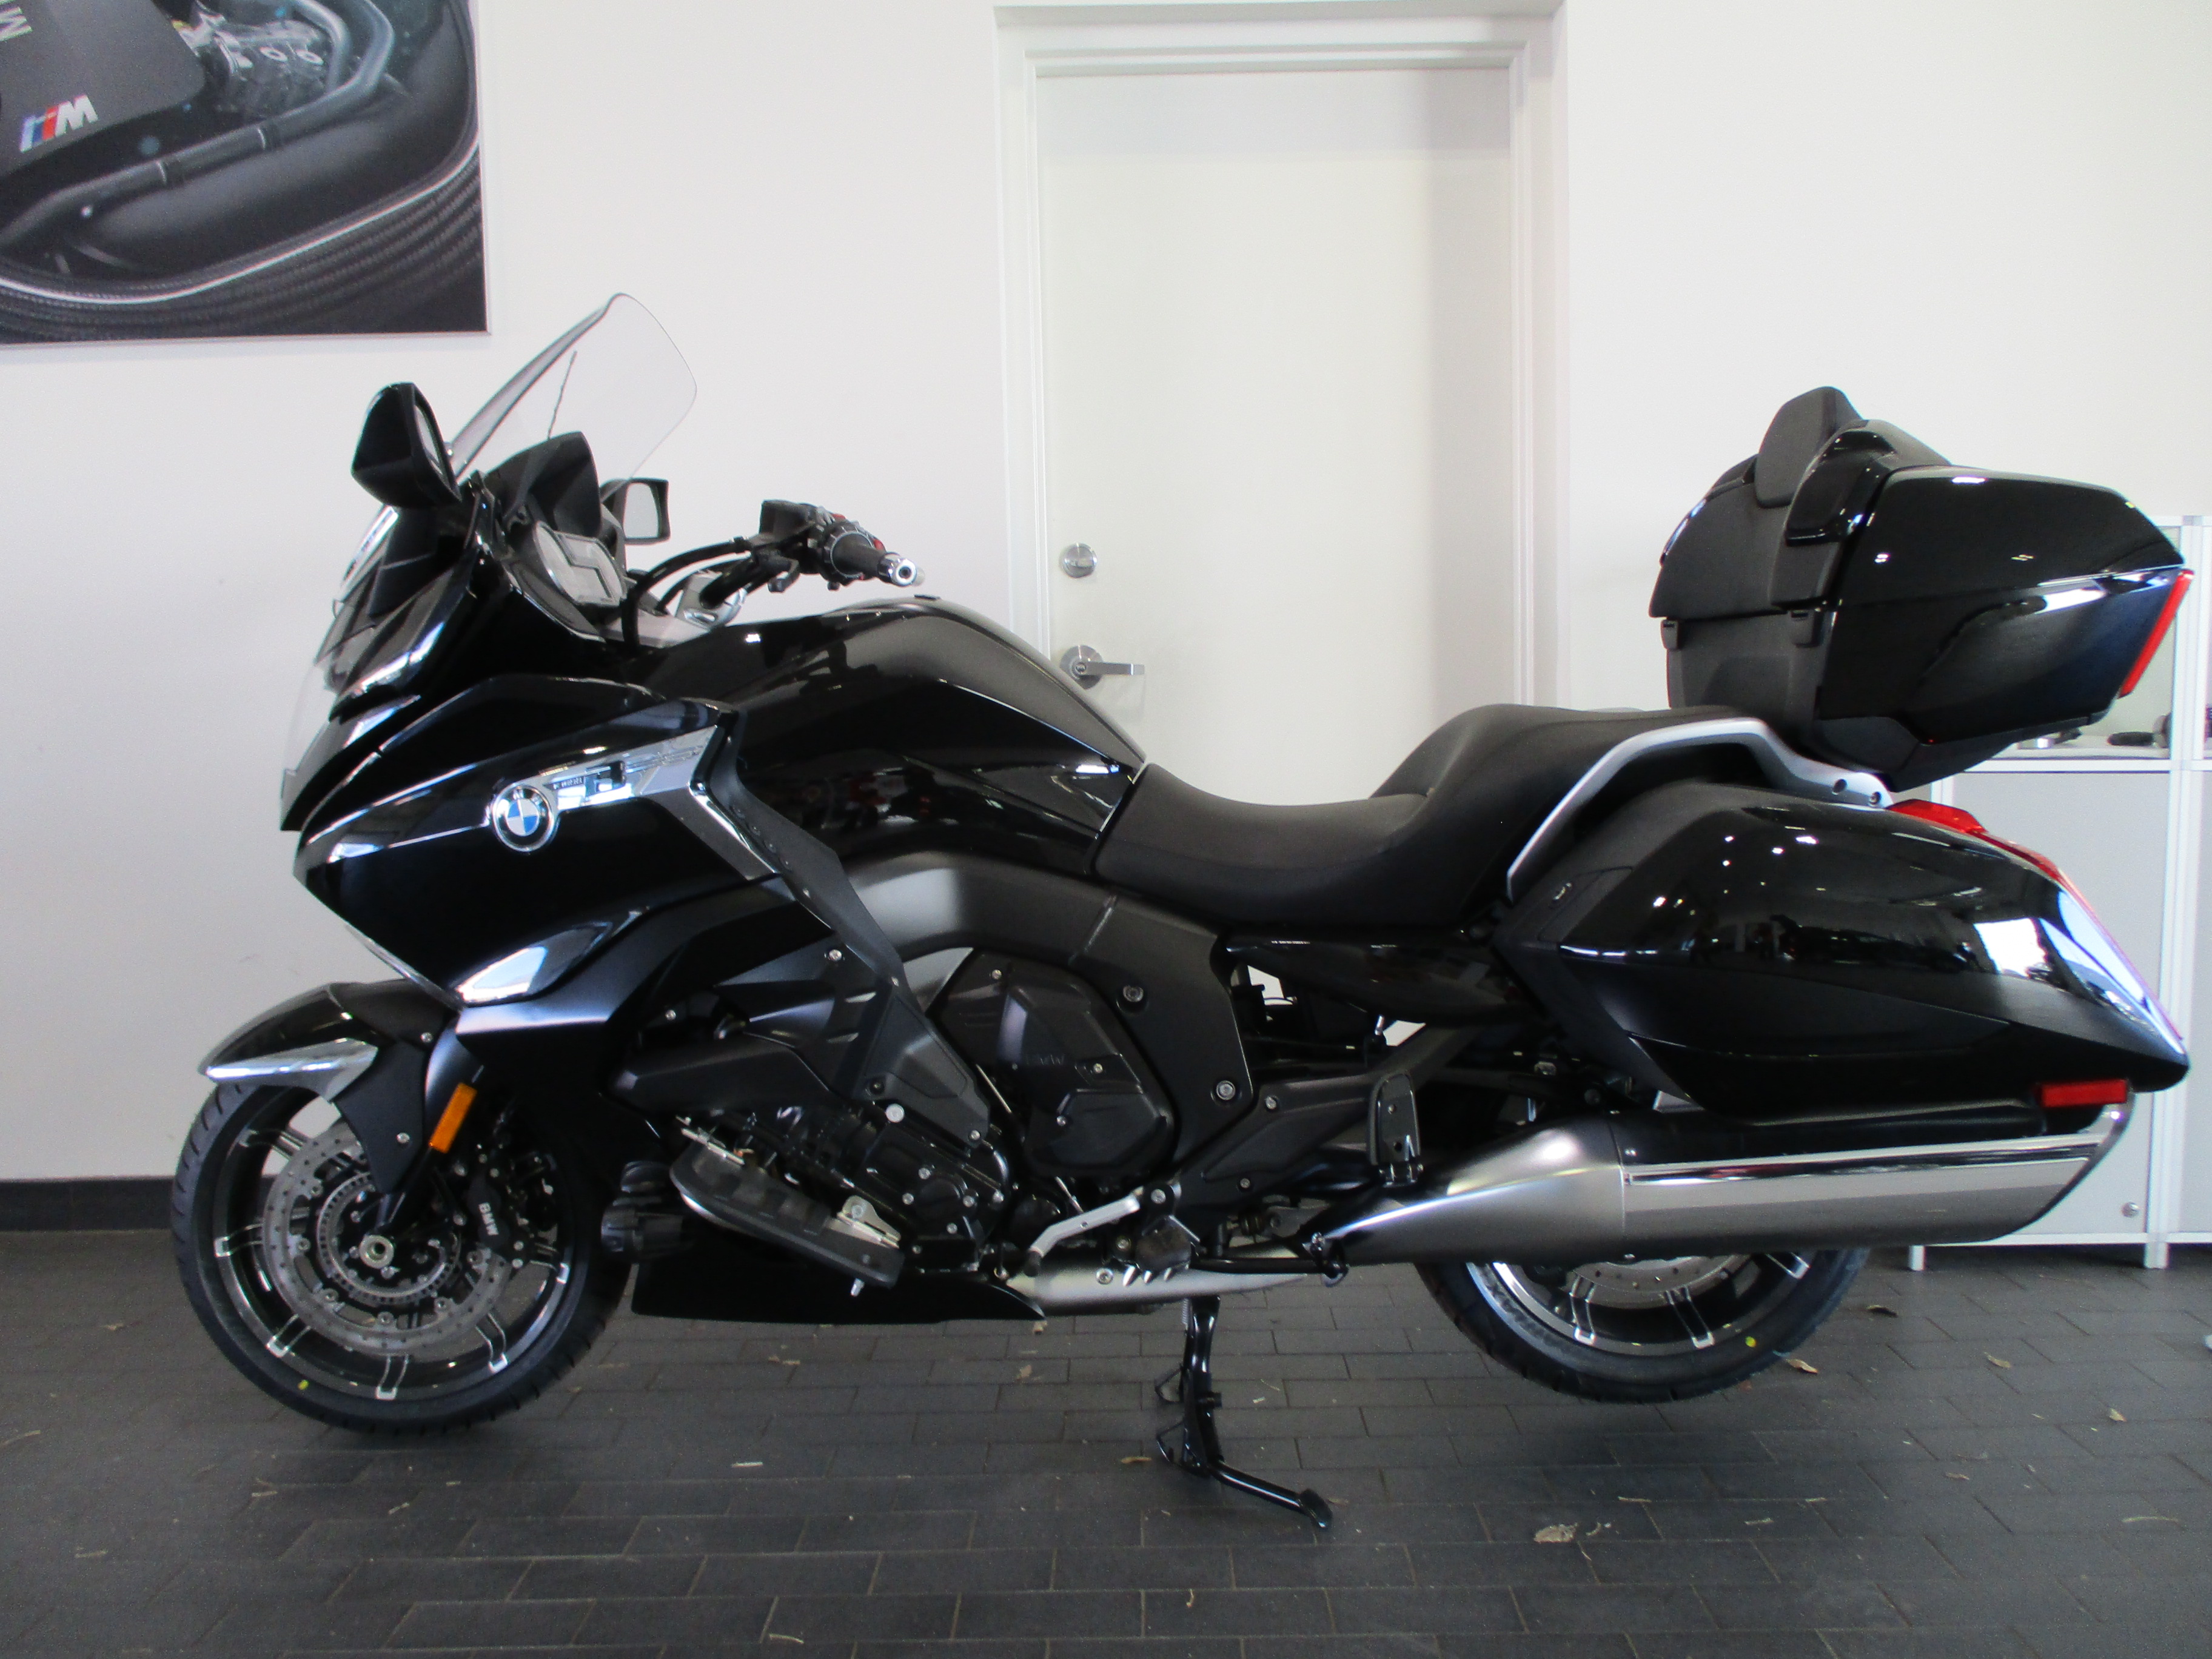 New Motorcycle Inventory - K1600B - Sandia BMW Motorcycles - Albuquerque, NM.